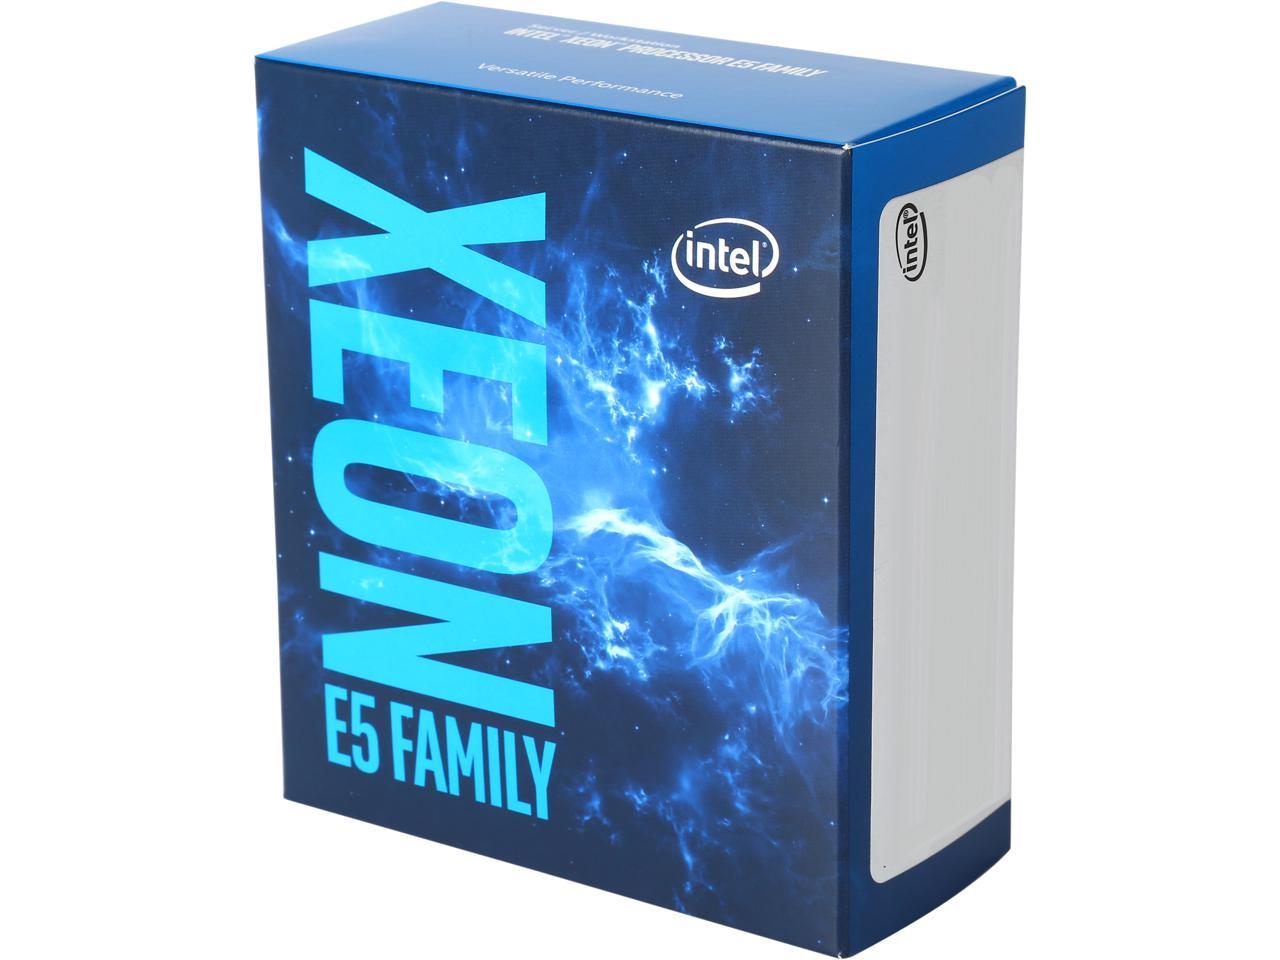 Intel Xeon E5-2630 V4 Broadwell-EP 2.2 GHz 10 x 256KB L2 Cache 25MB L3 Cache LGA 2011-3 85W BX80660E52630V4 Server Processor